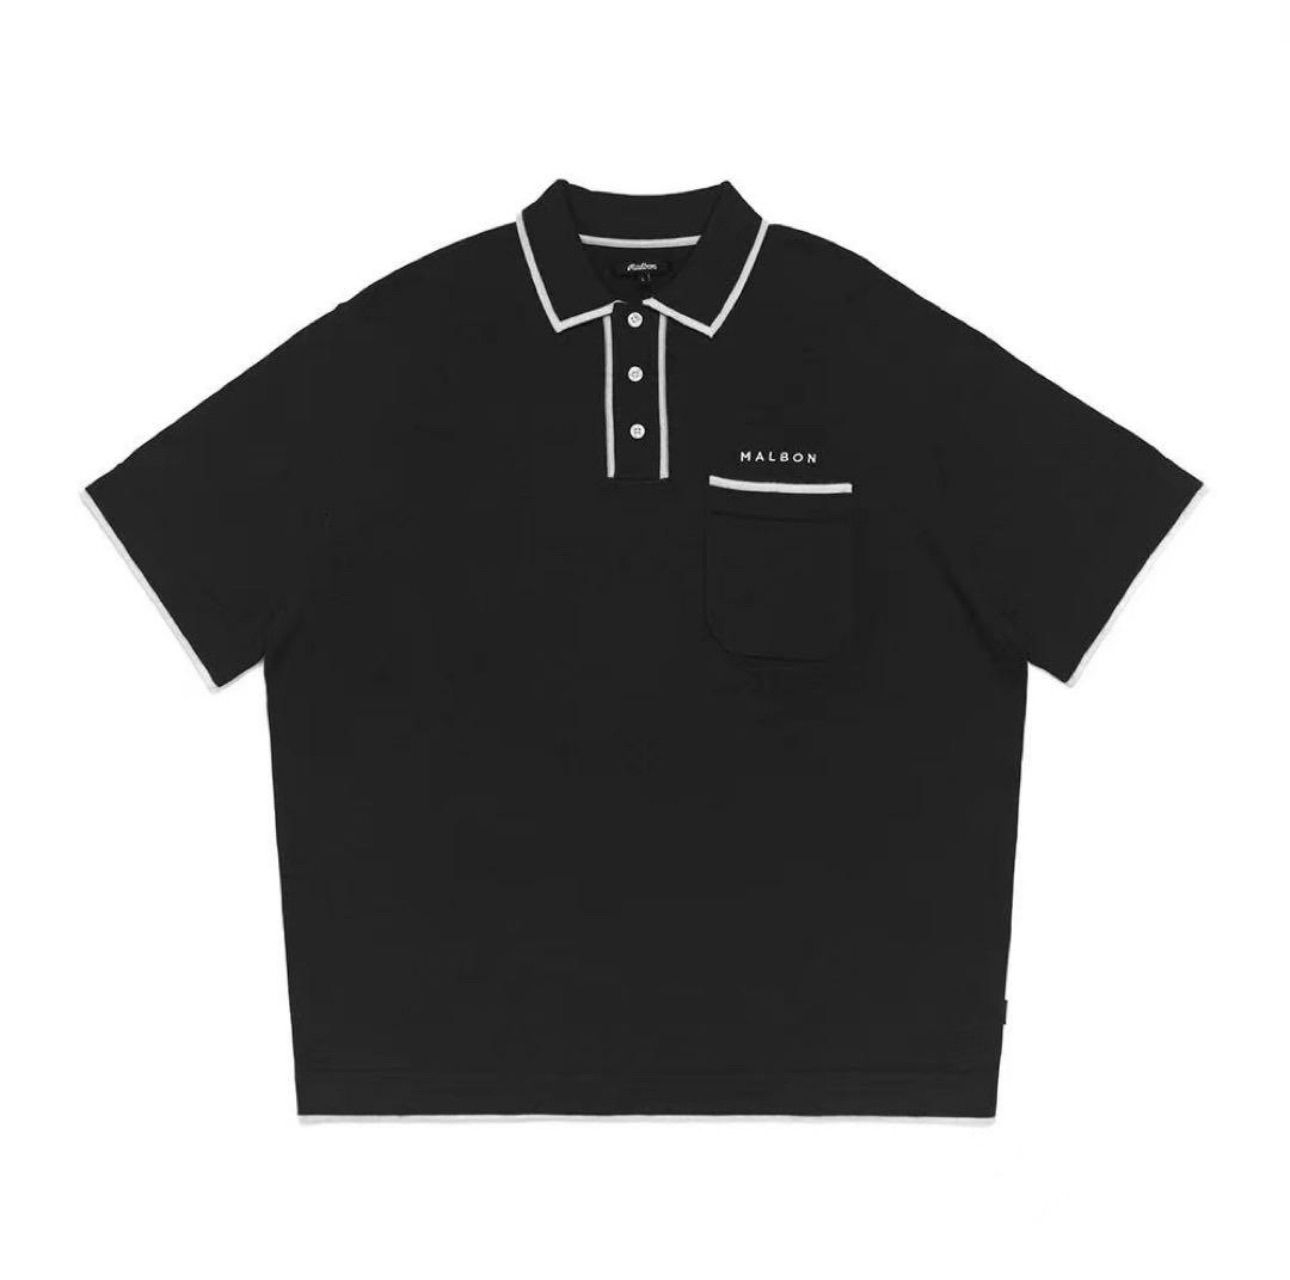 MALBONマルボン ゴルフウェア メンズ ポロシャツ 半袖 Tシャツ - メルカリ